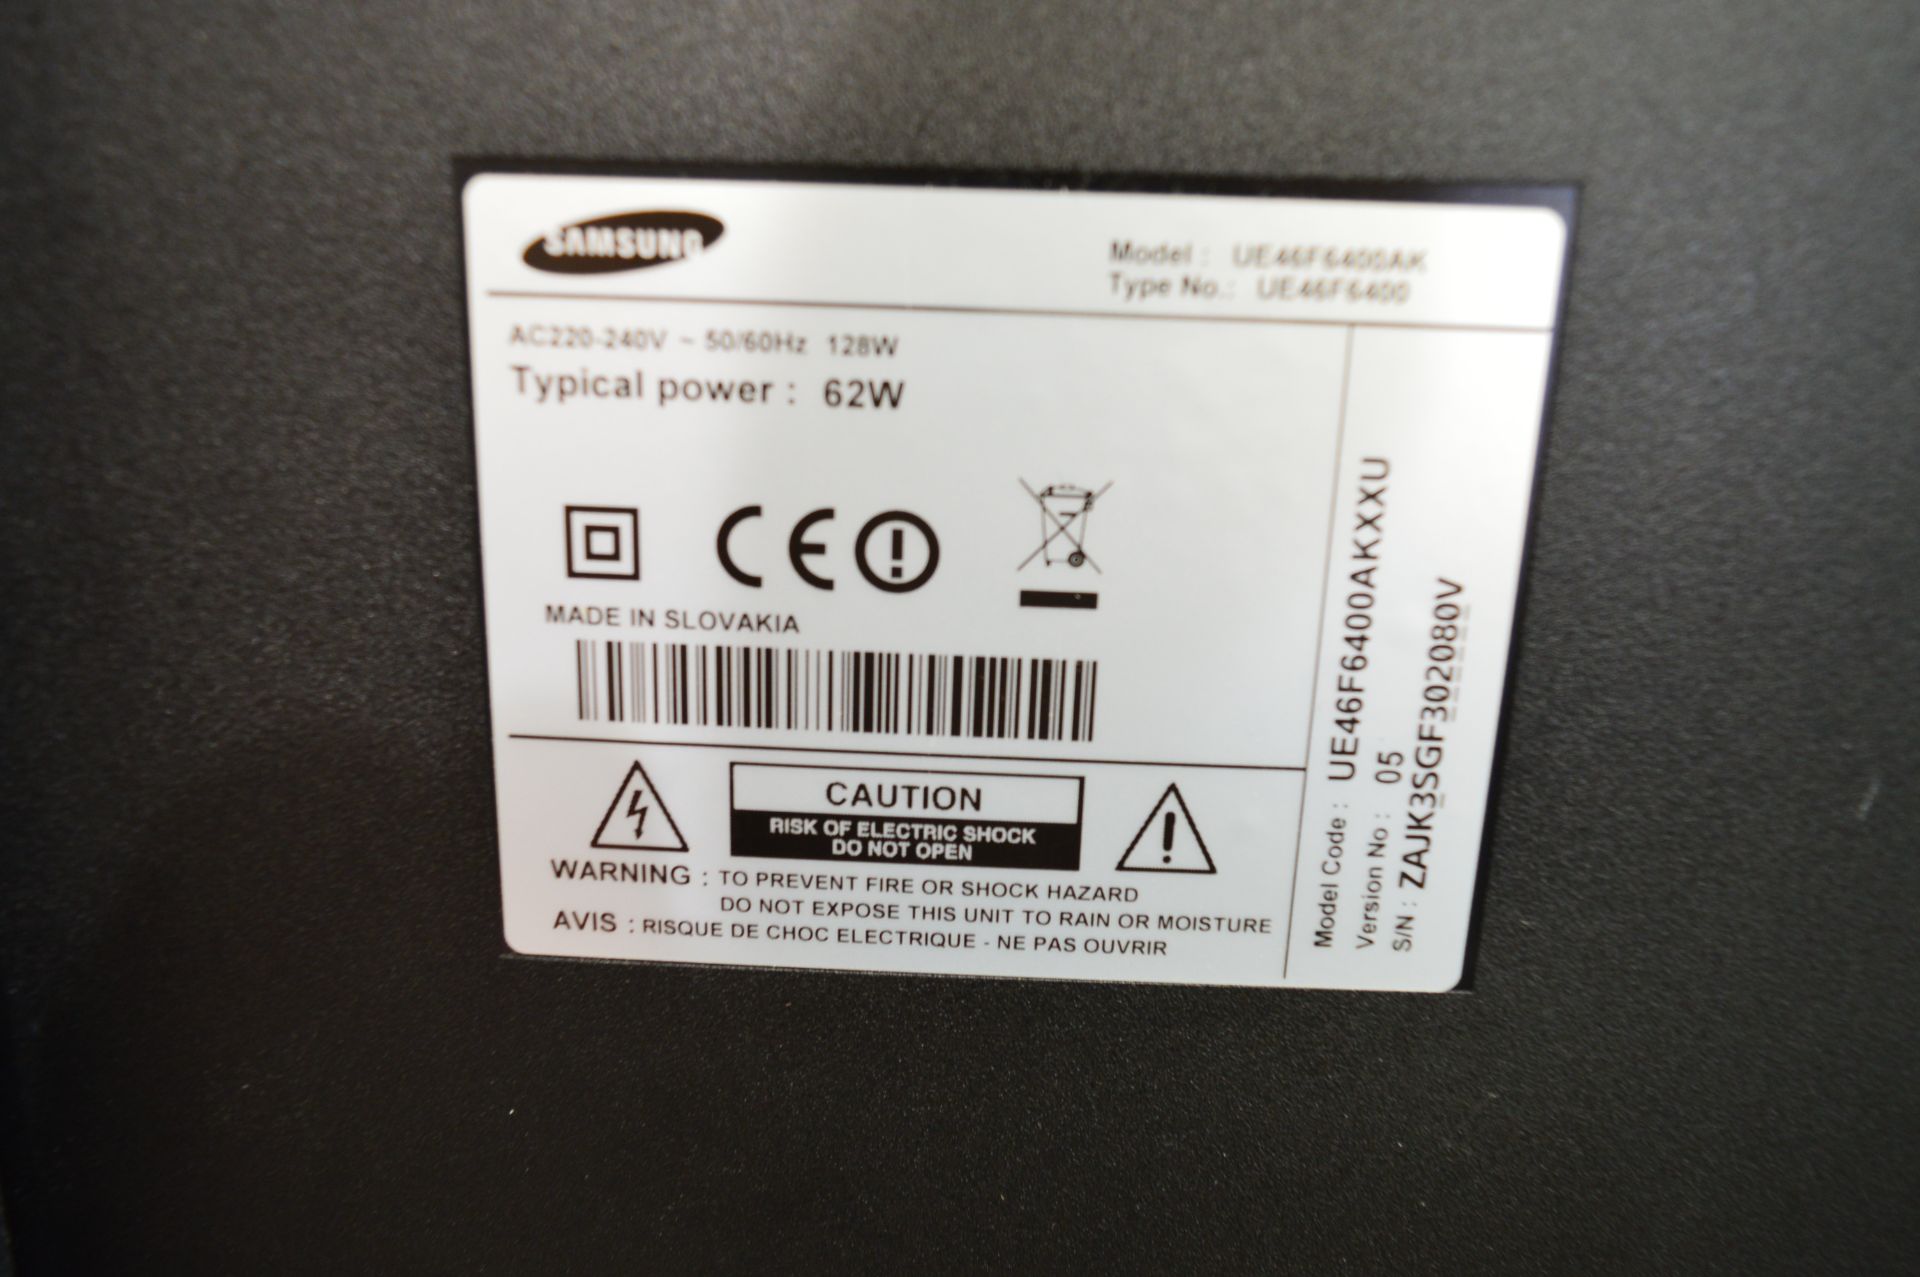 Samsung, 46" full HD LED Smart 3D TV, Model UE46F6 - Image 2 of 4